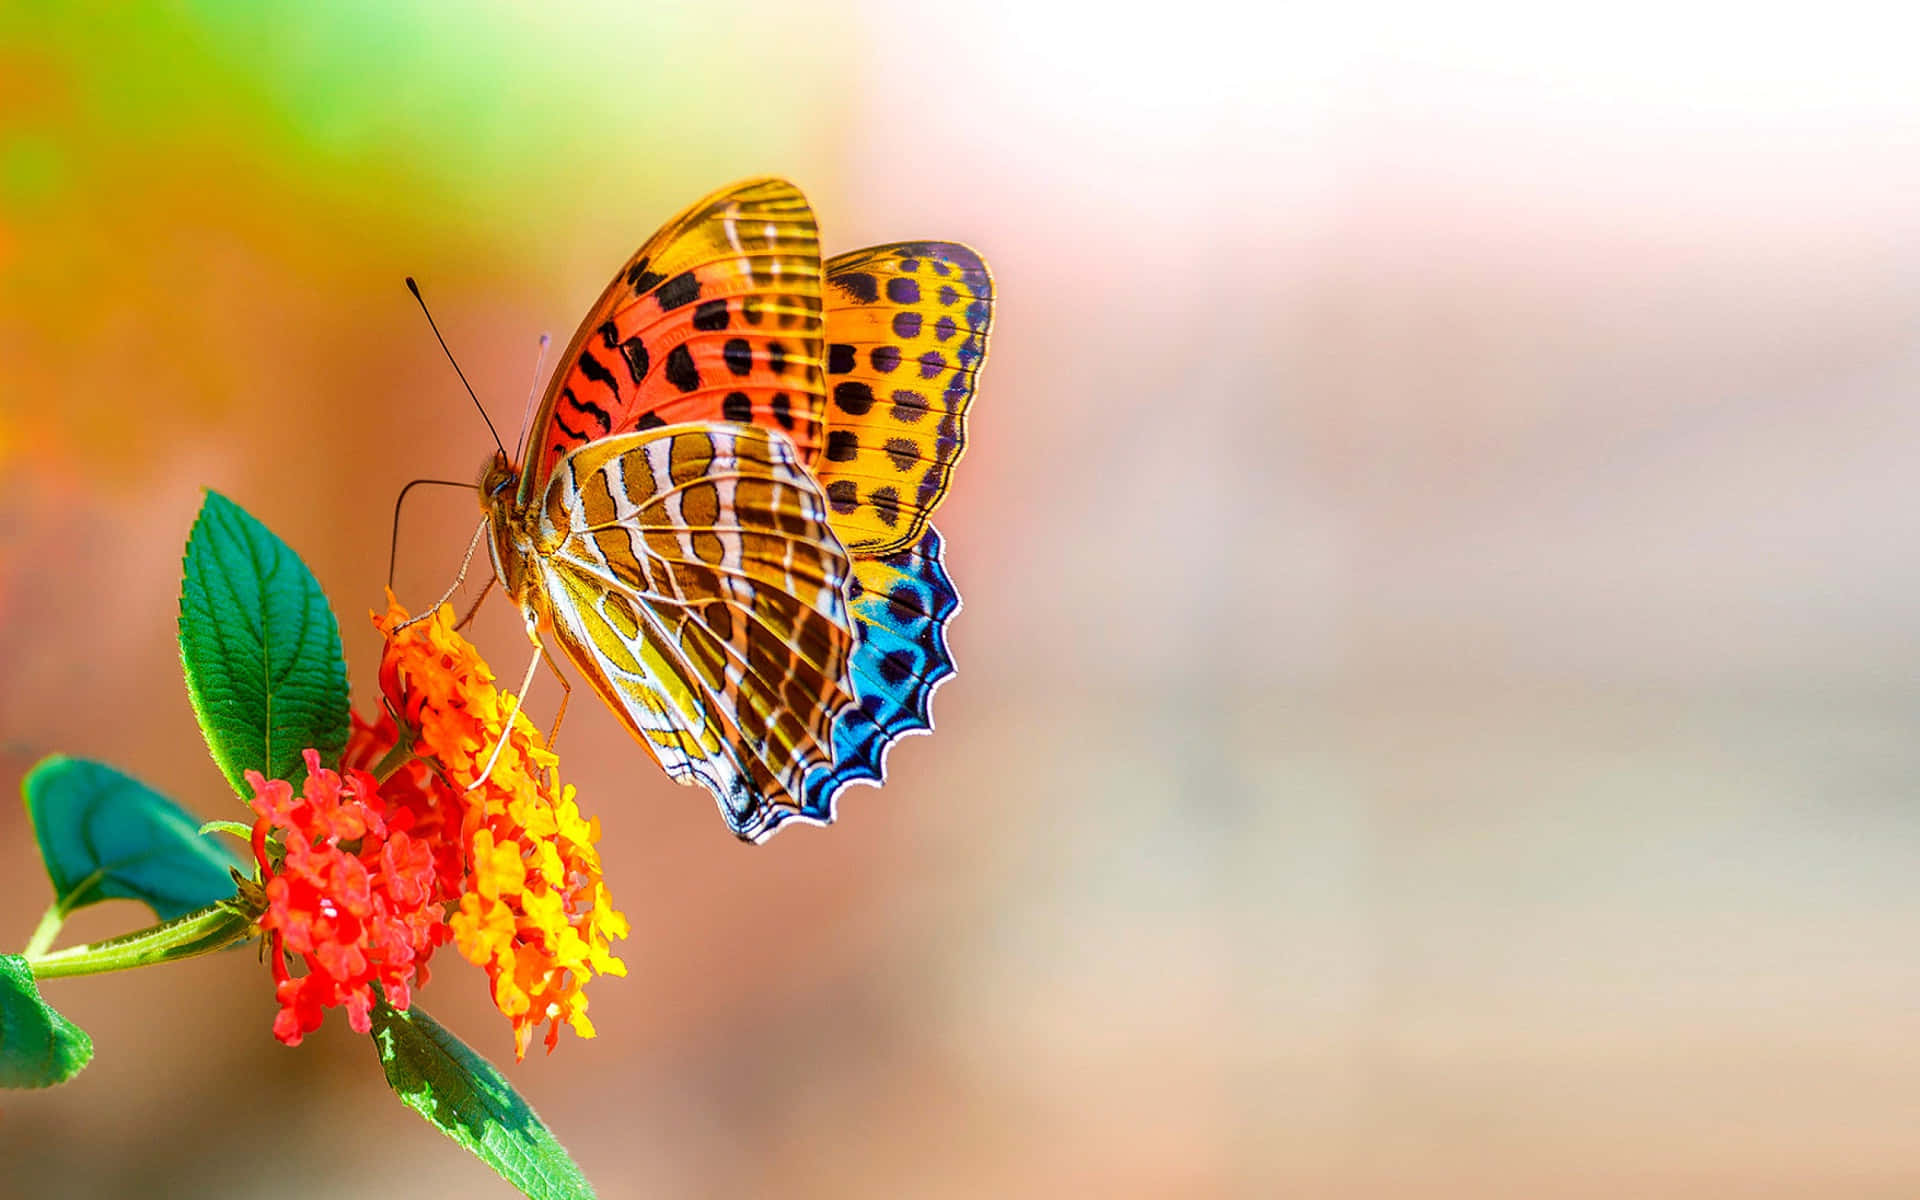 An emerging butterfly ready to take flight Wallpaper